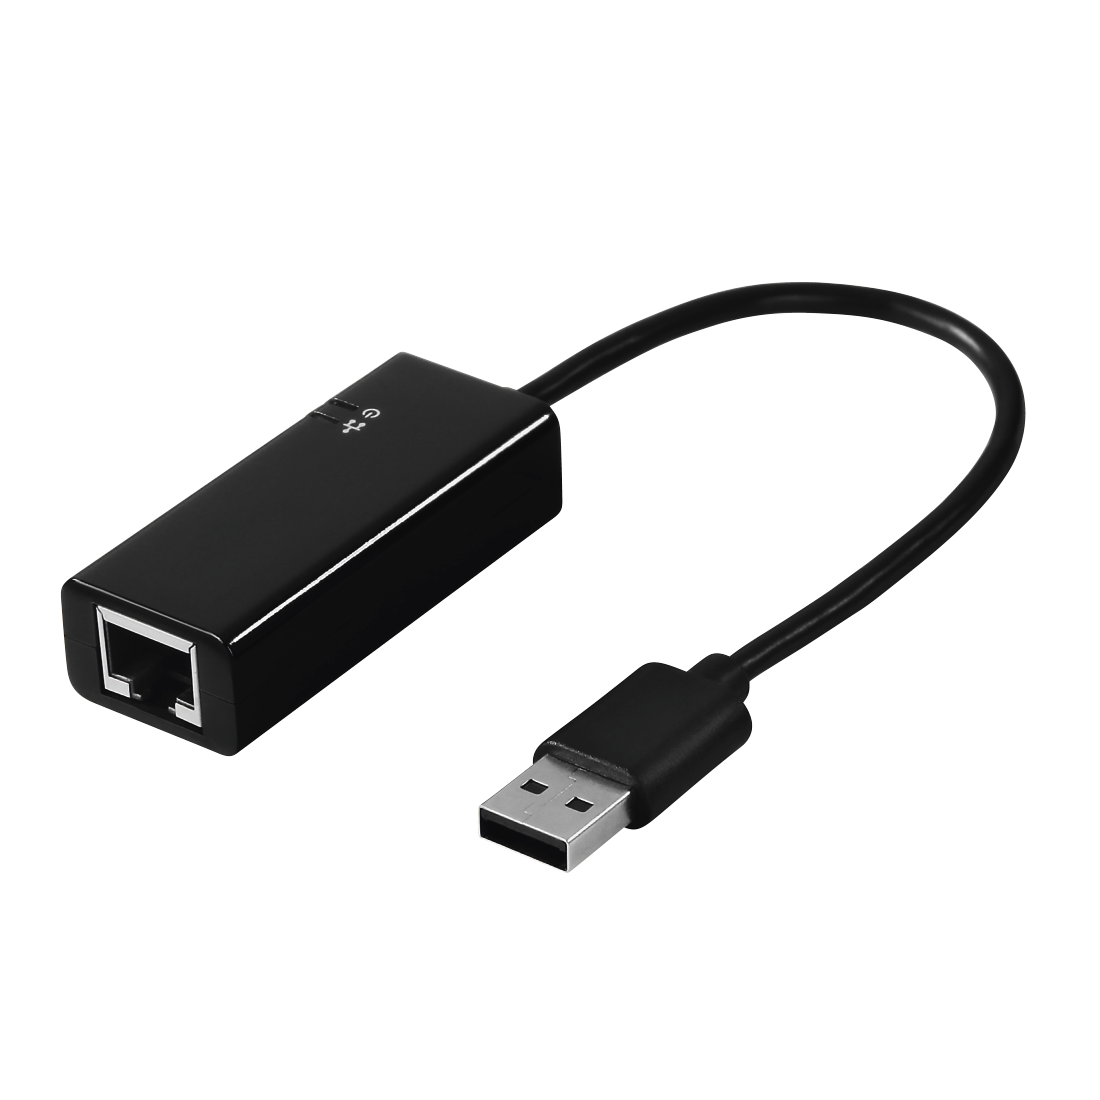 Hama USB 2.0 Fast Ethernet Adapter, 10/100 Mbps